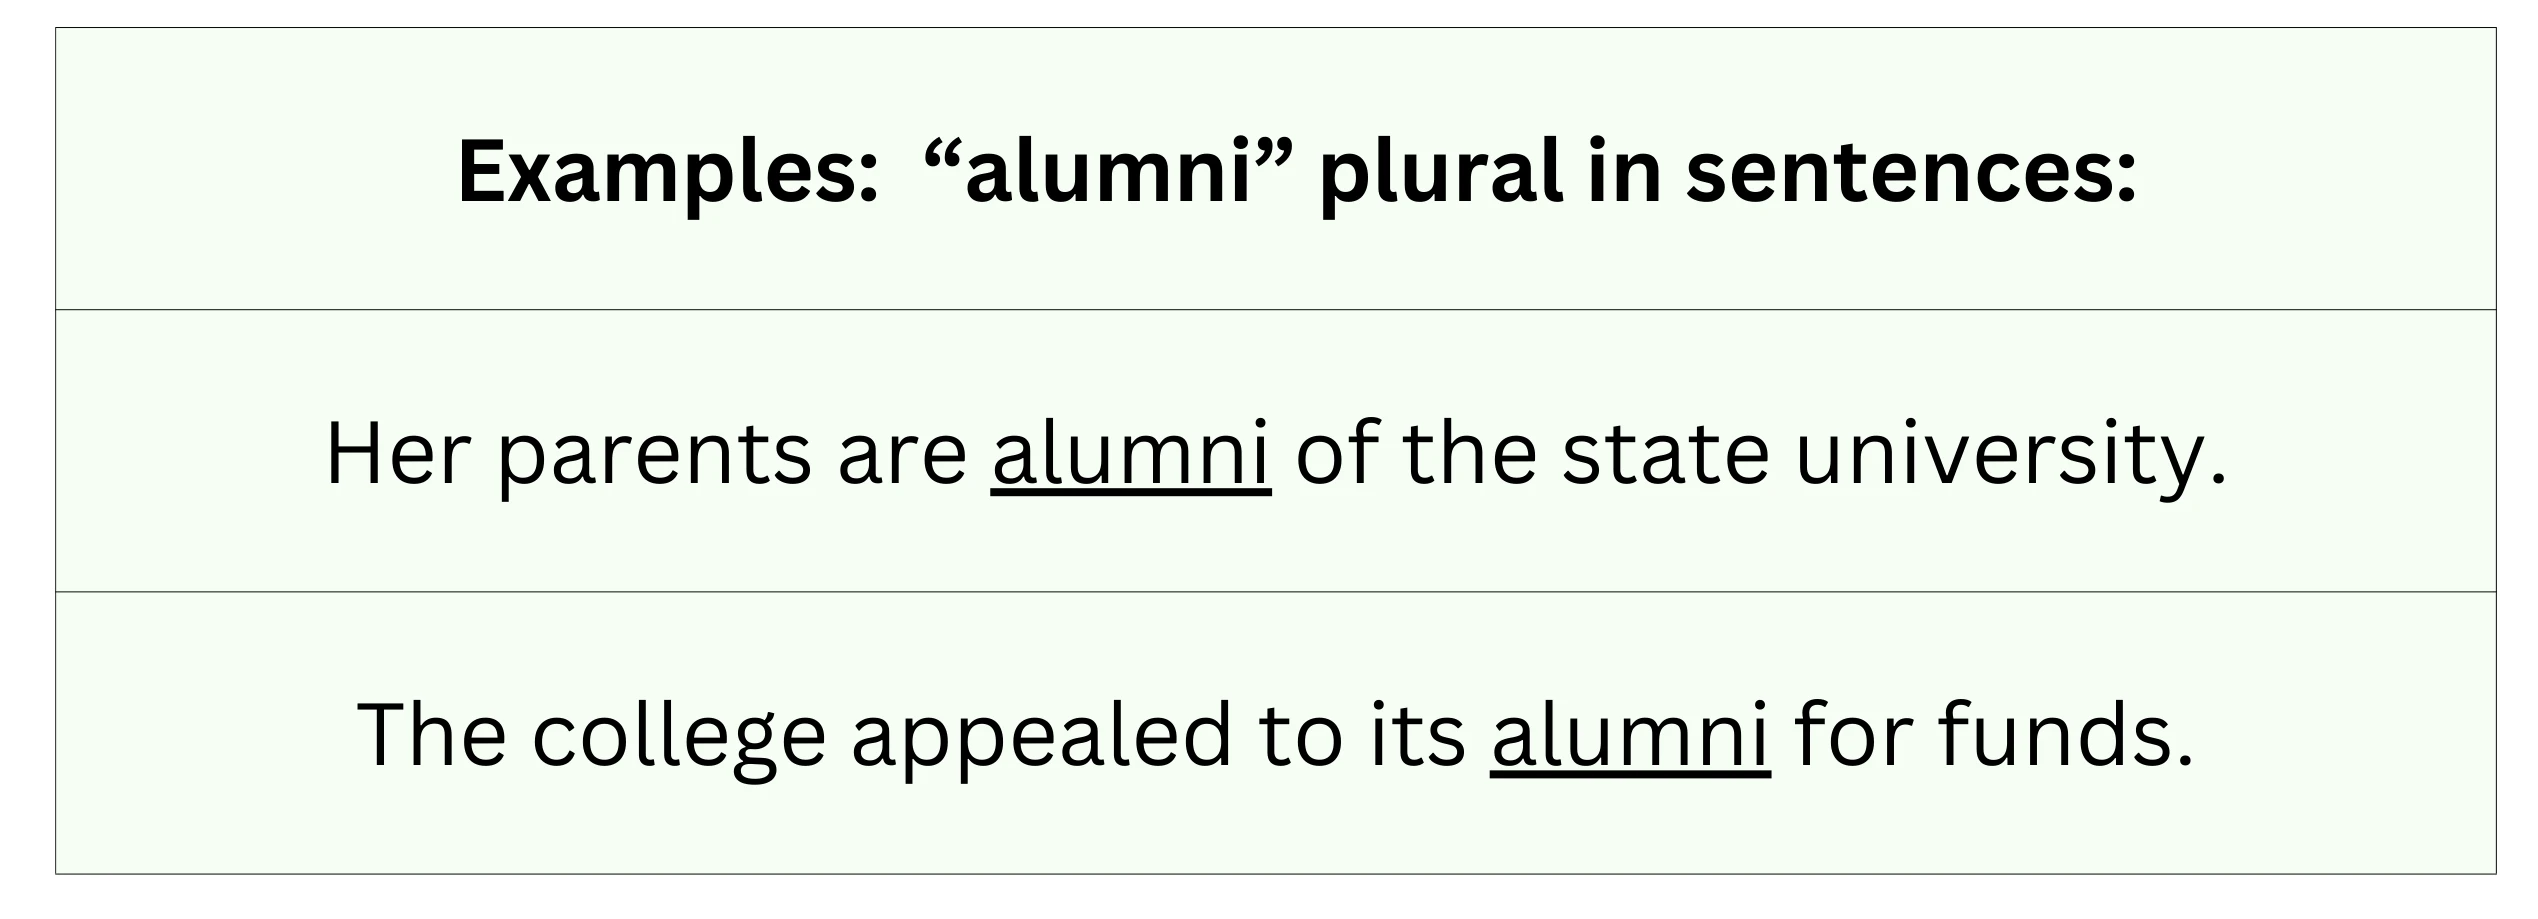 Examples of "alumni" in sentences.